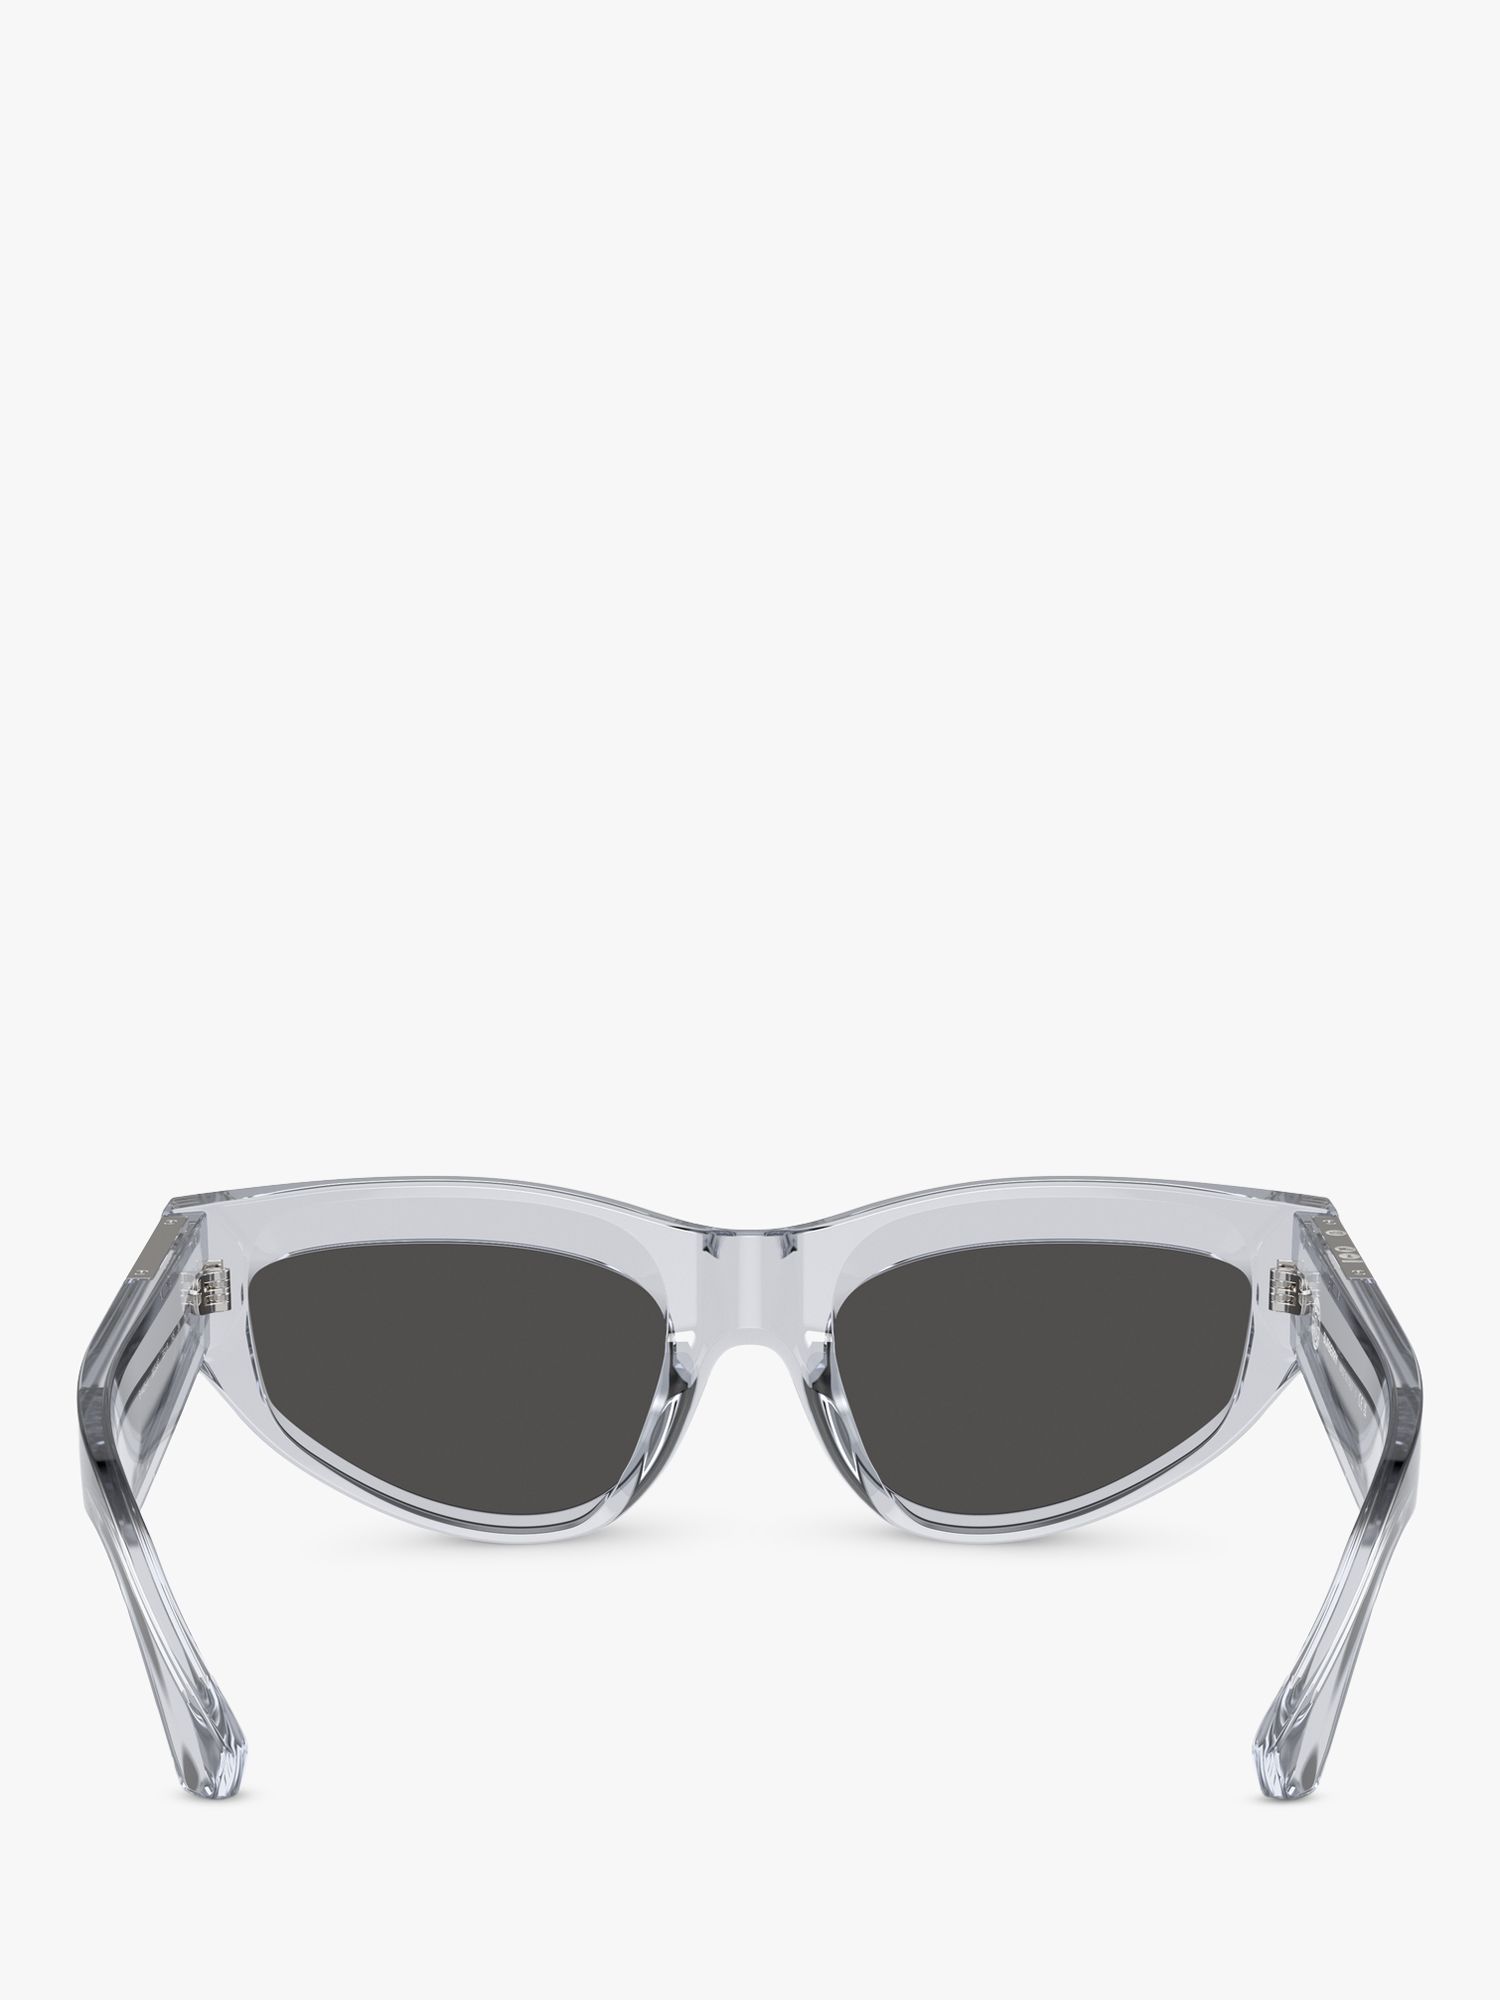 Buy Burberry BE4425U Women's Cat's Eye Sunglasses Online at johnlewis.com